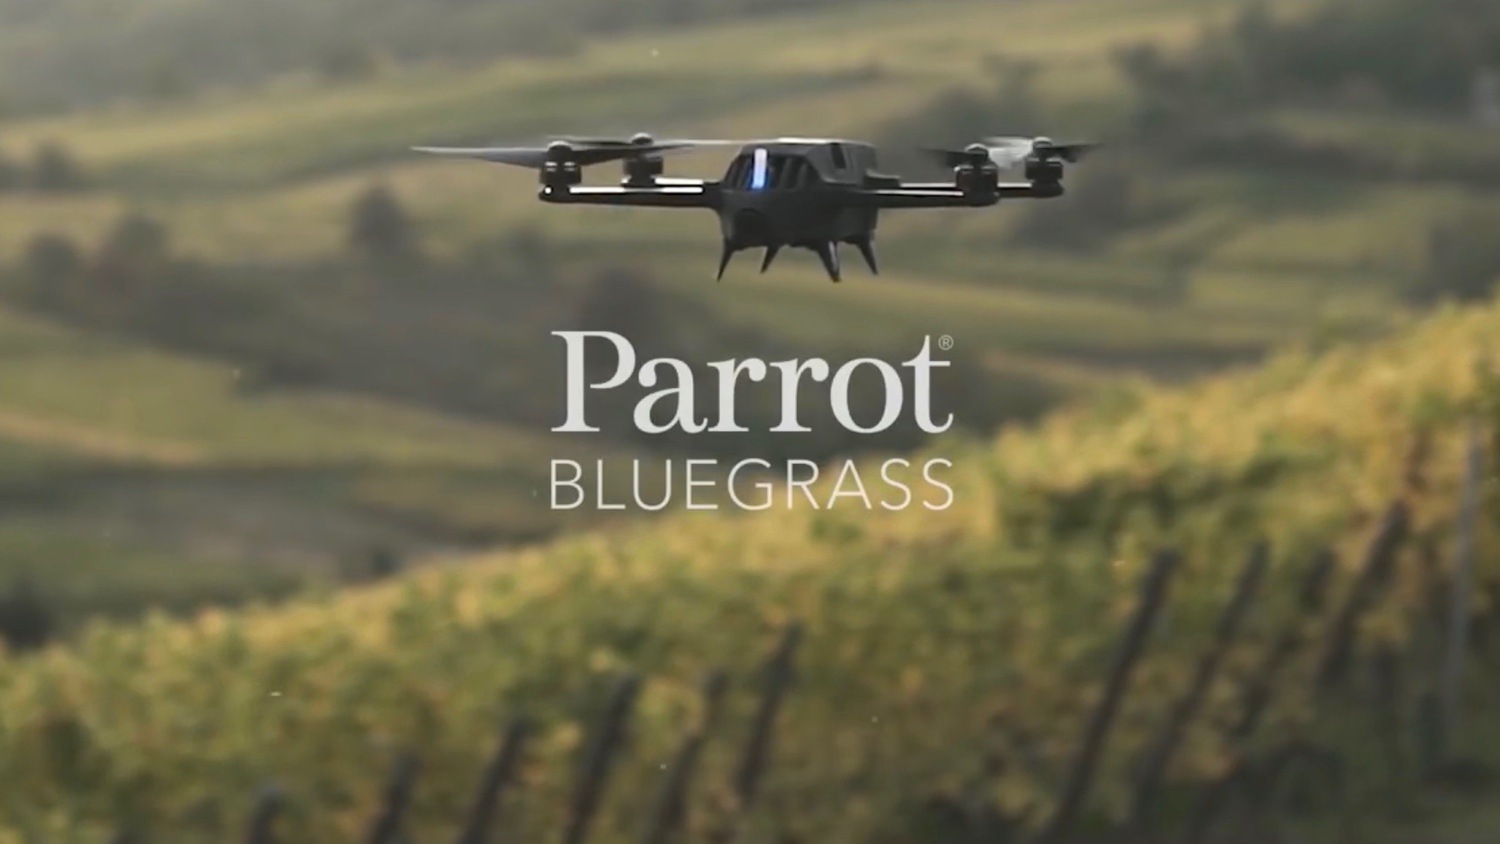 Press Release: Parrot unveils Parrot Bluegrass at the Commercial UAV Expo!